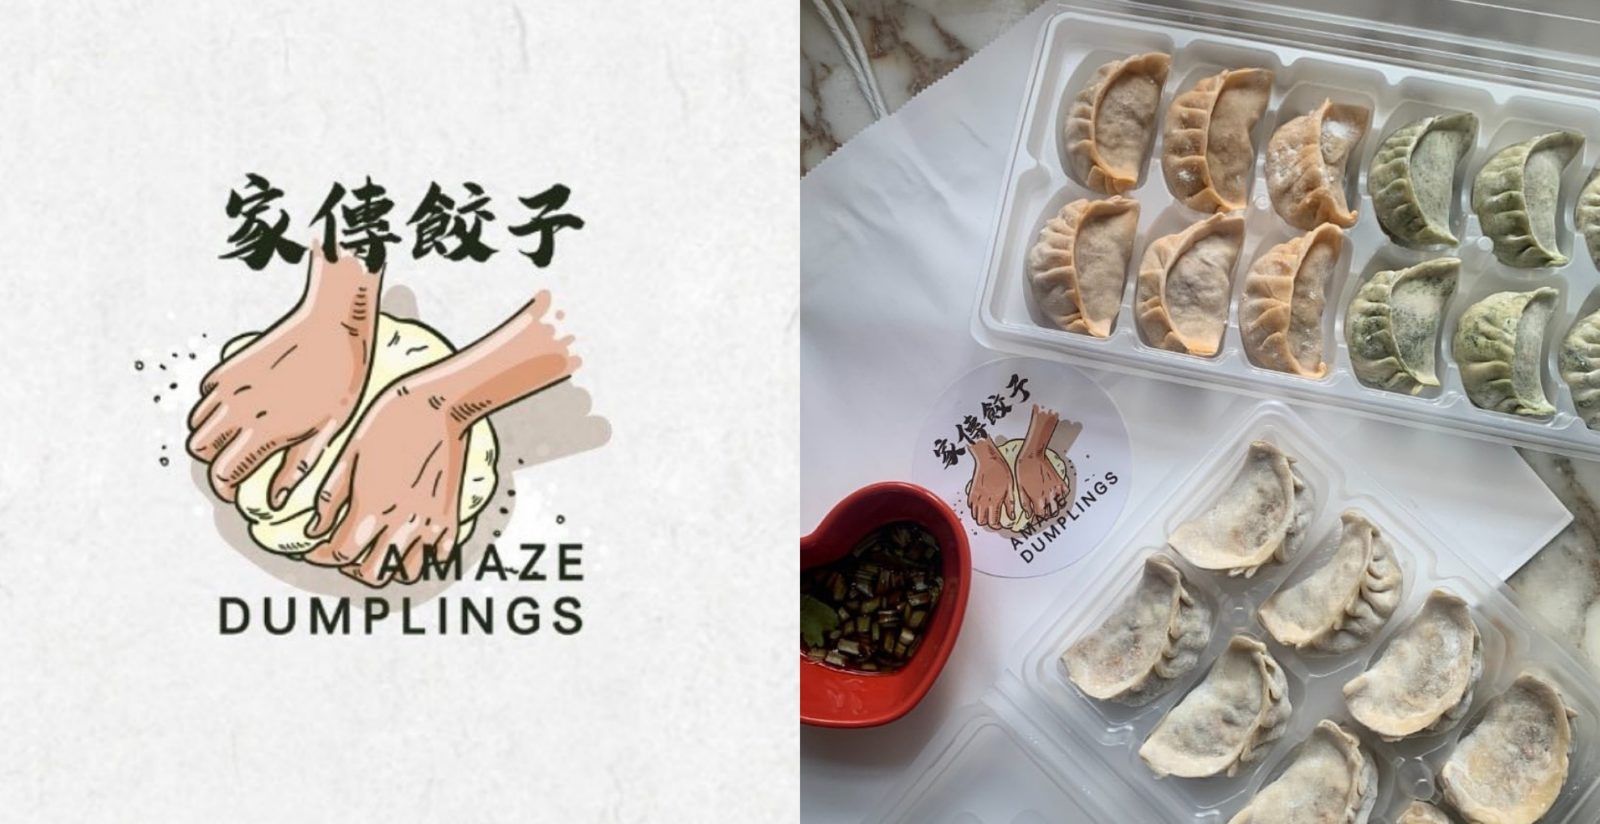 Made in Hong Kong: Amaze Dumplings’ homemade dumplings